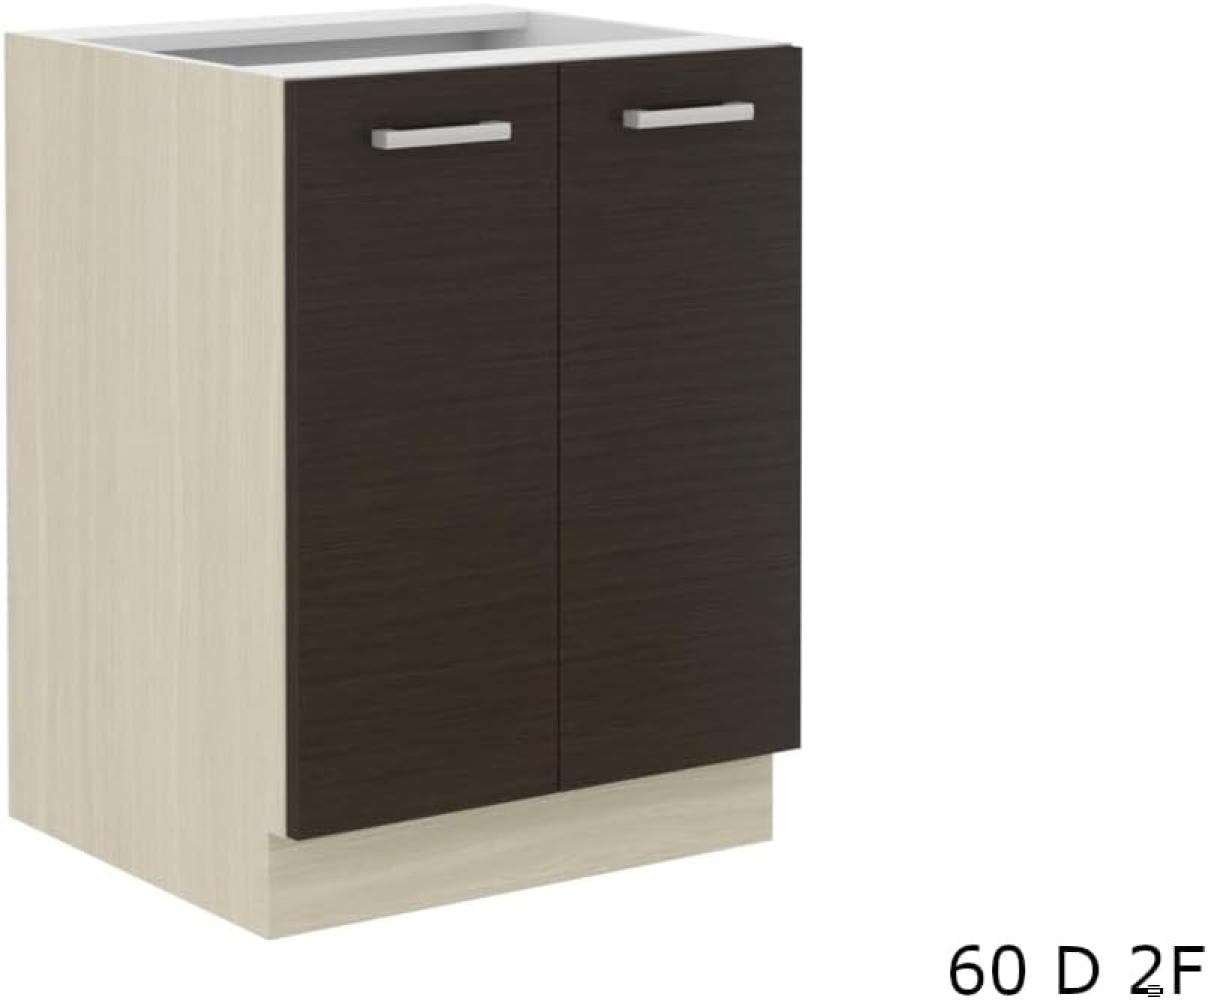 Zweitüriger Küchenunterschrank AVIGNON 80 D 2F BB, 80x82x52, Eiche Ferrara/legno dunkel Bild 1